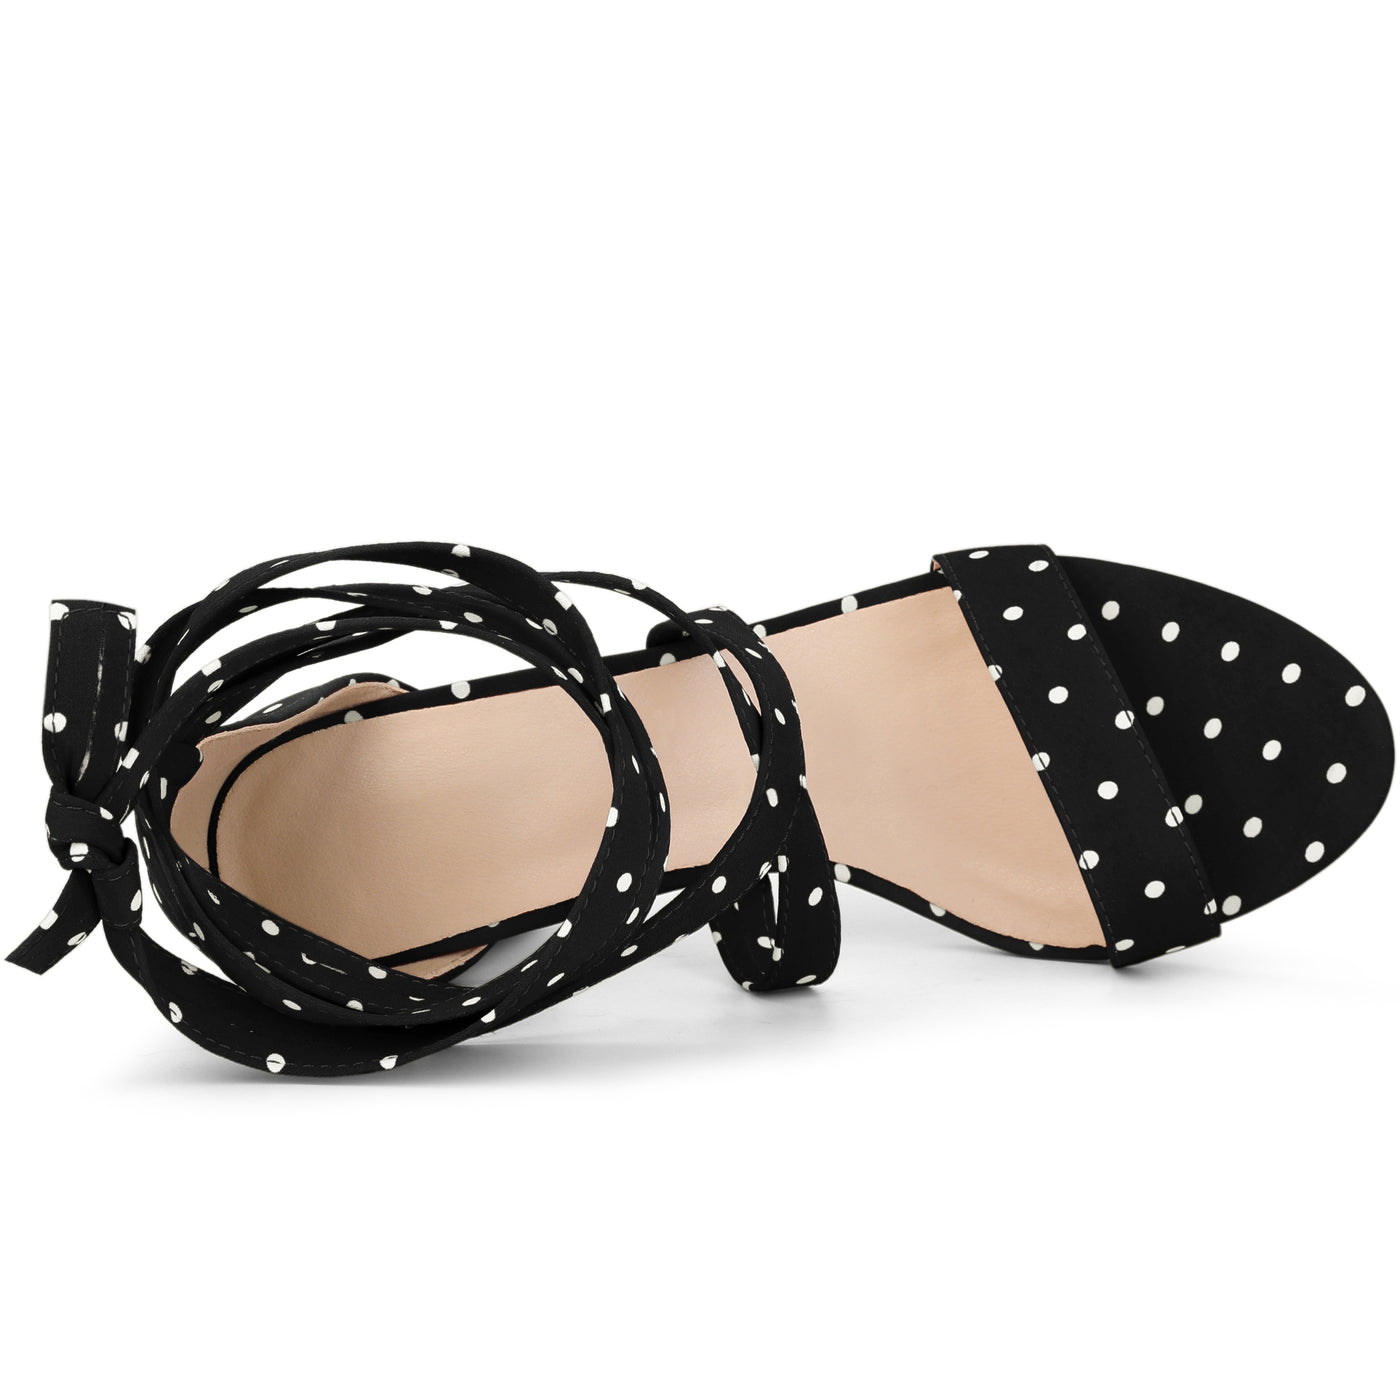 Allegra K Elegant Polka Dot Strappy Lace Up Chunky Heel Sandals